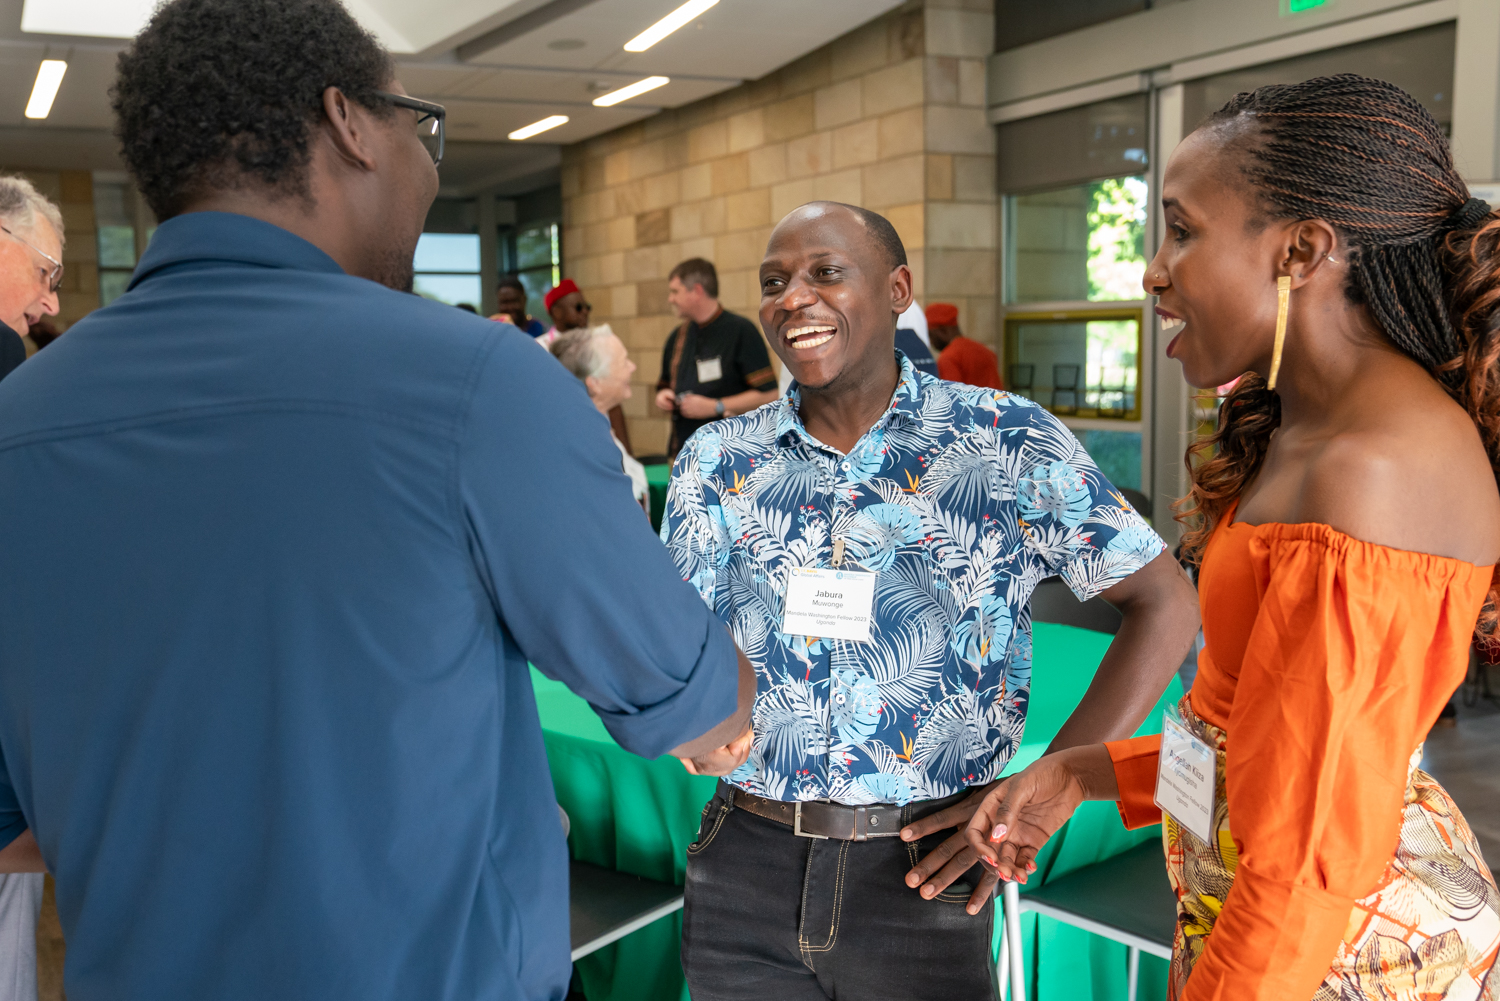 Jabura Muwonge (middle) shakes hands with a man inside the International Center as Angellah Kiiza Kyomugisha smiles to the right.